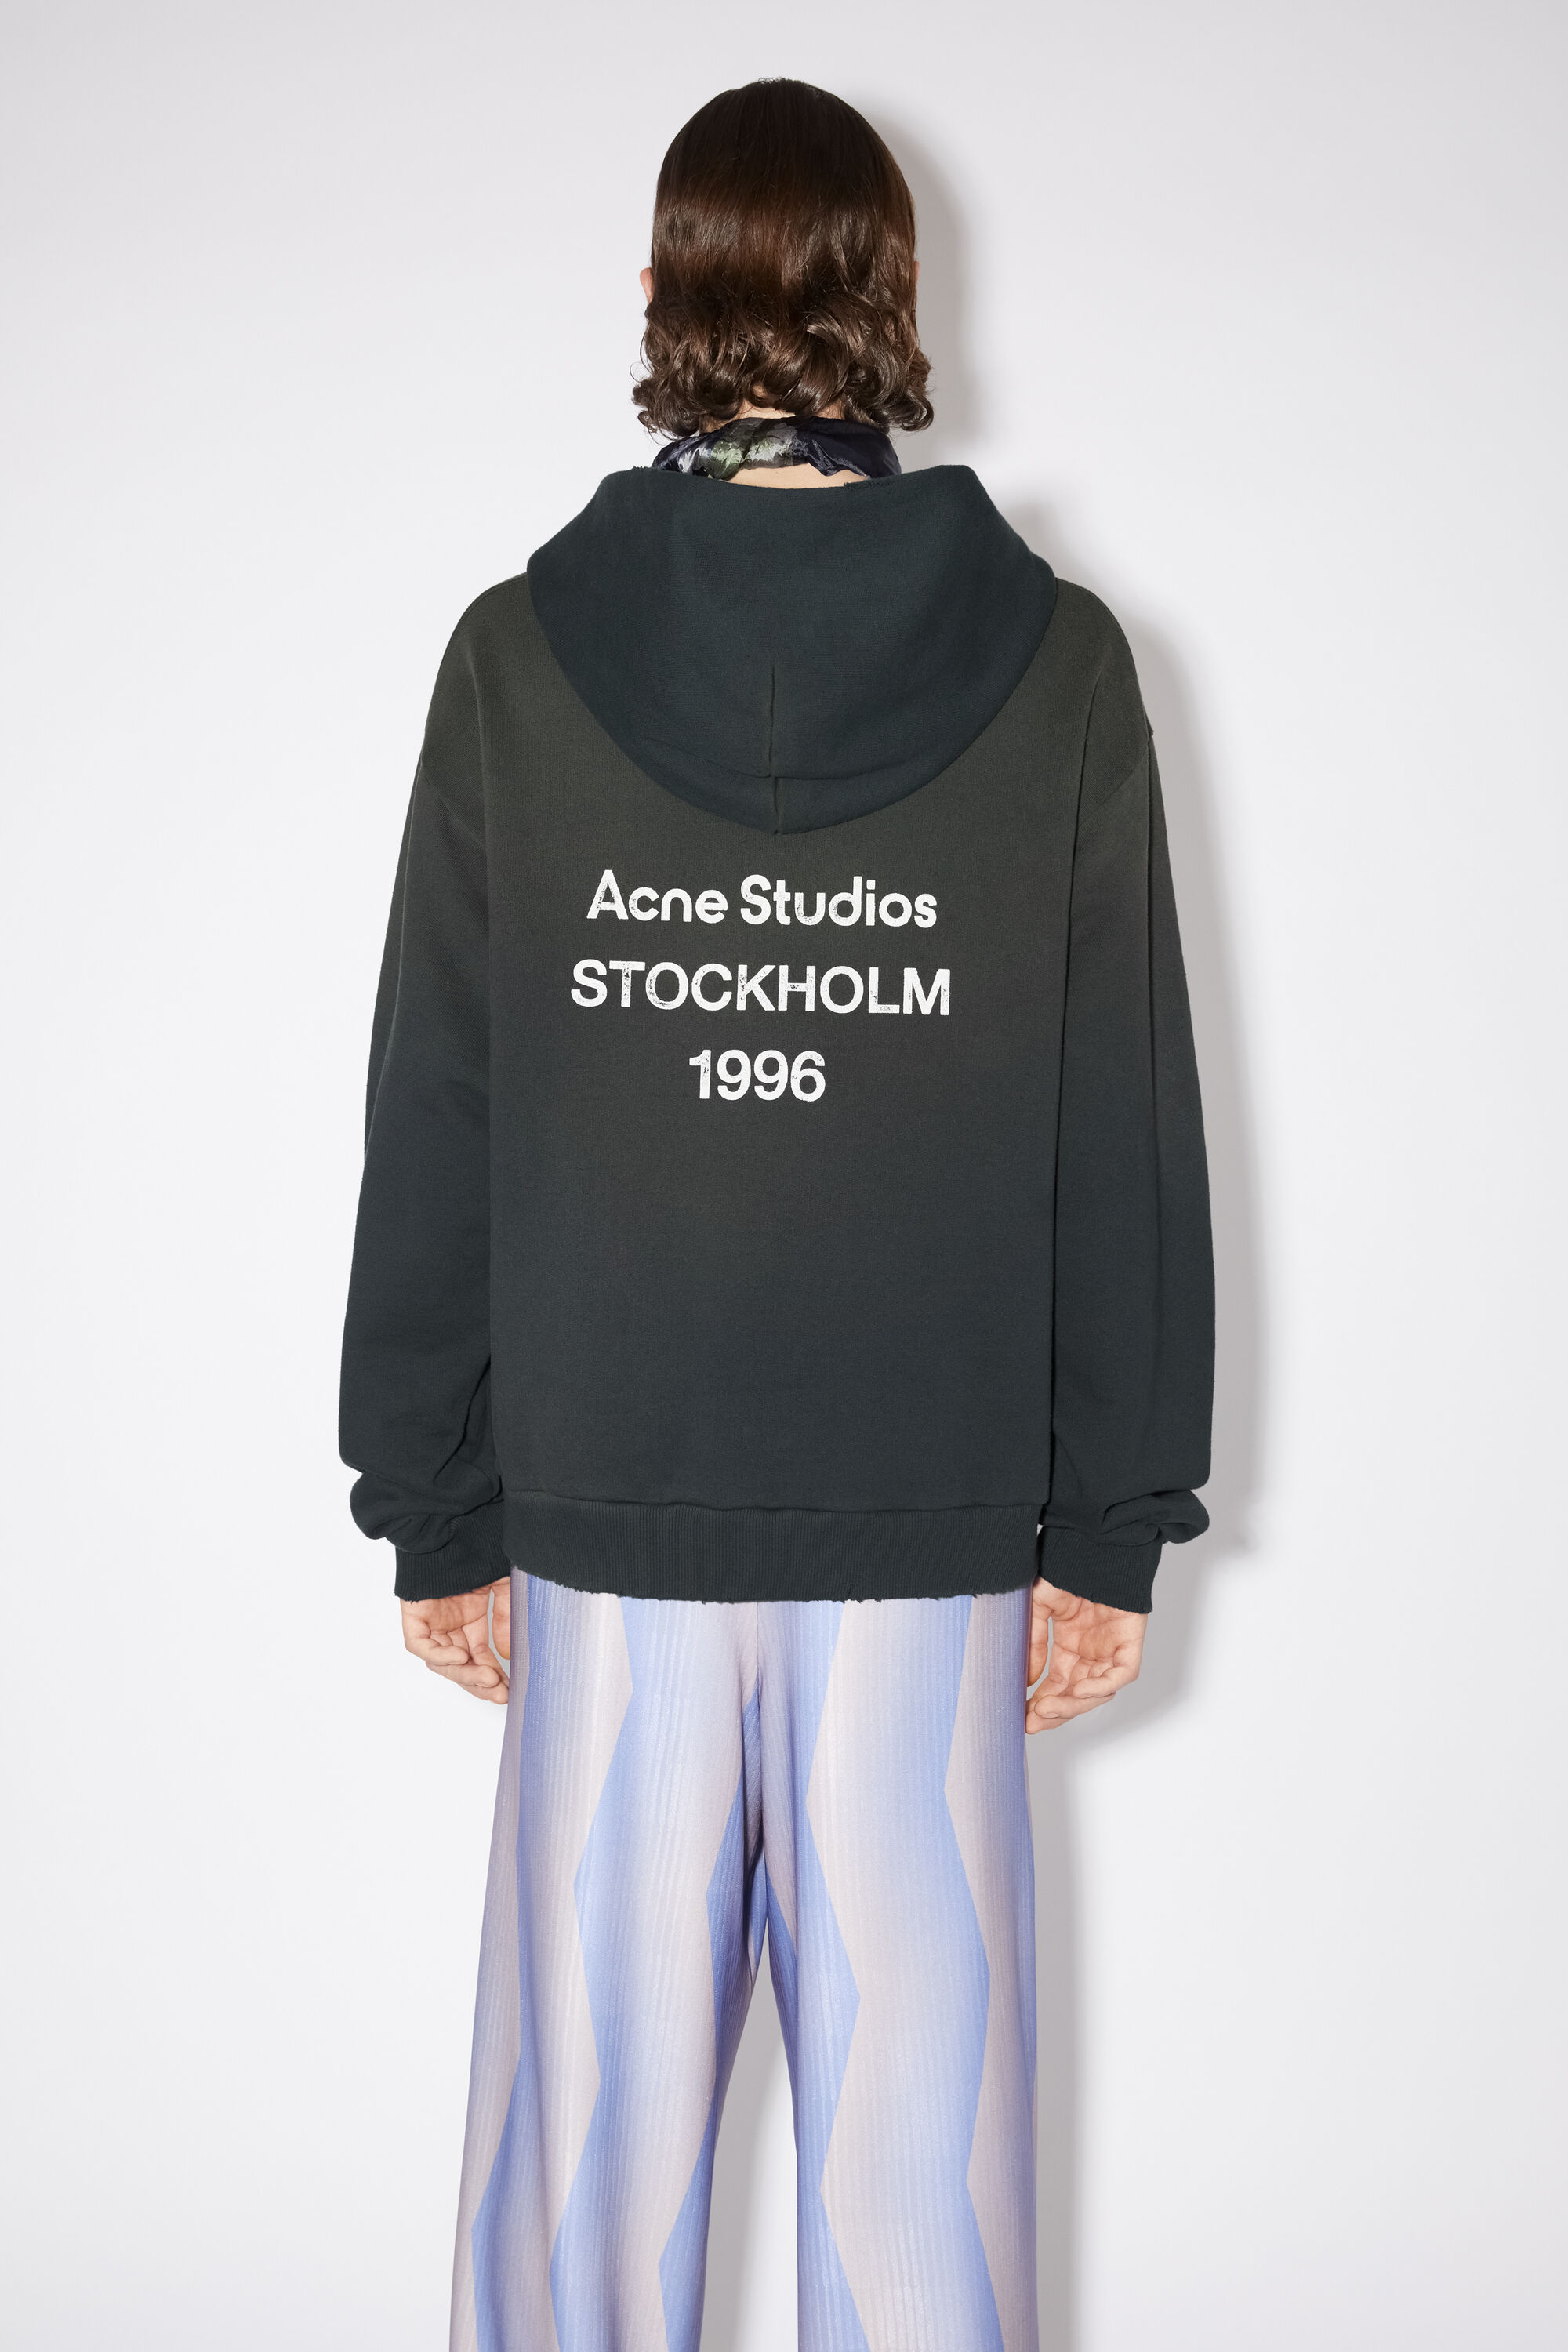 Acne Studios - Logo hooded sweater - Black